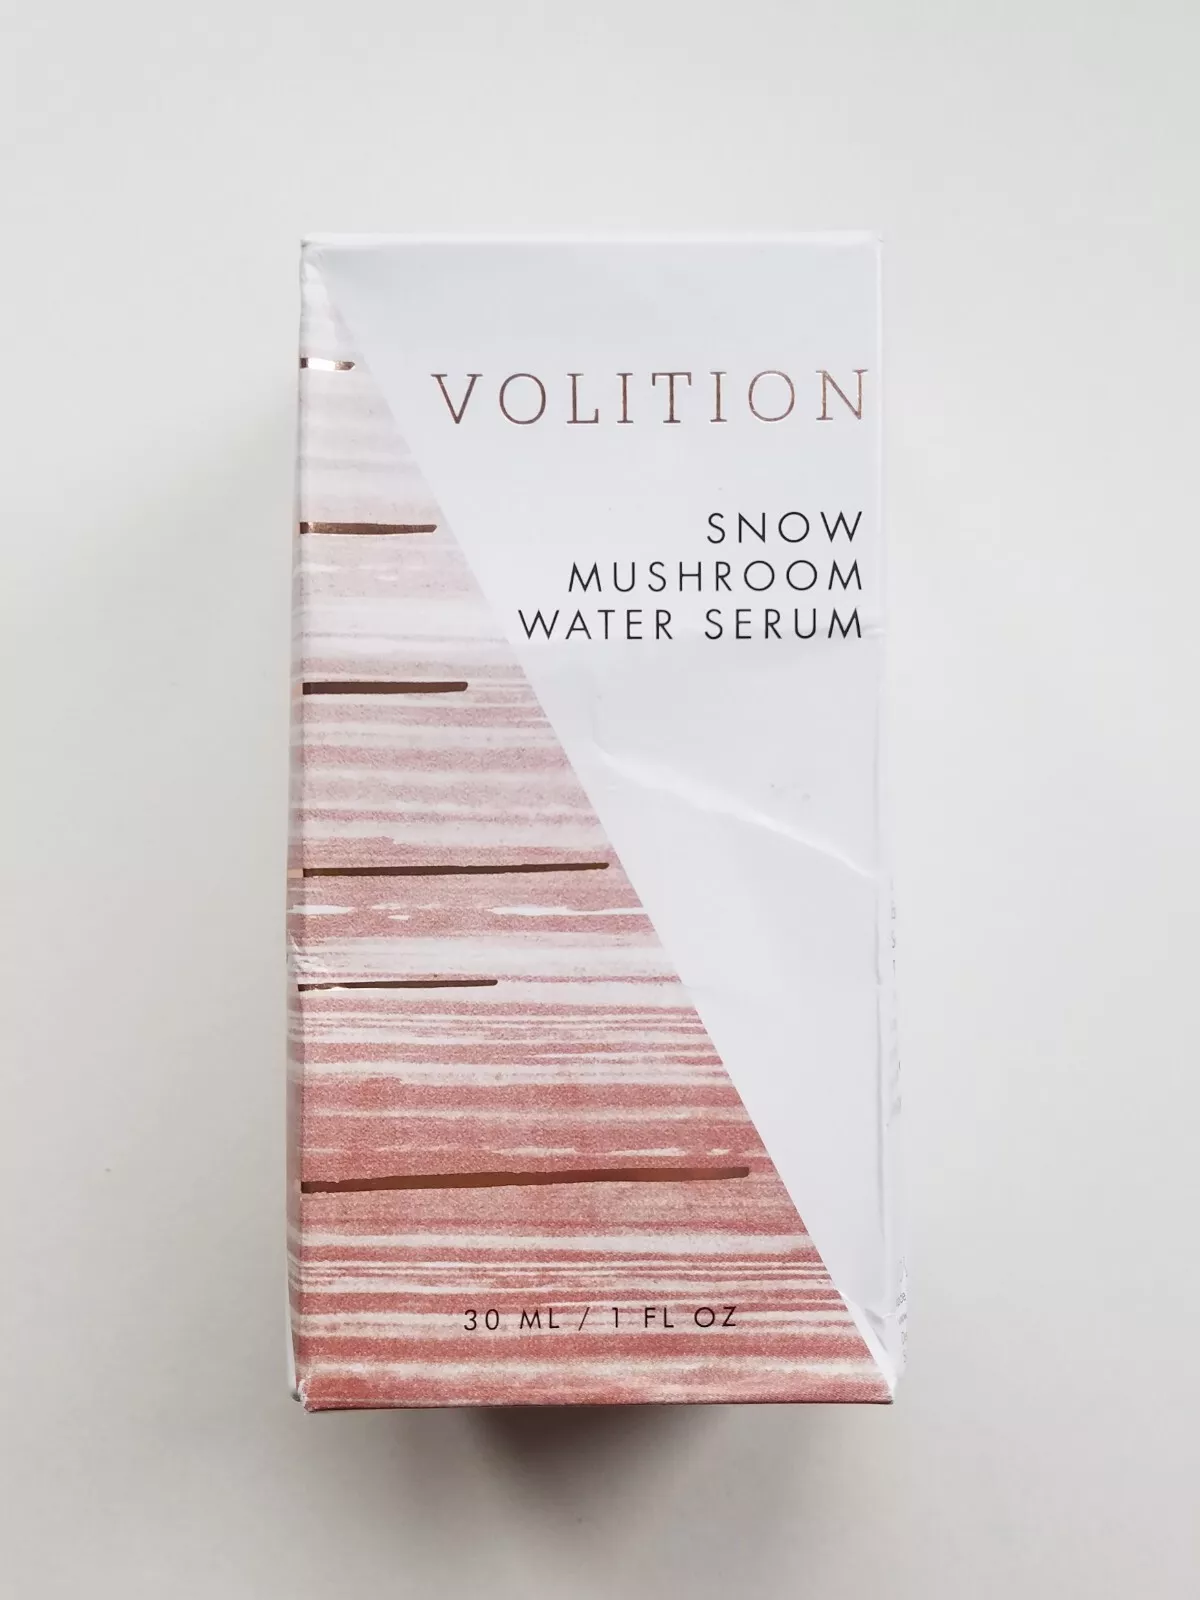 Volition Snow Mushroom Water Serum 1 Oz. Full Size, New  NIB - $32.99